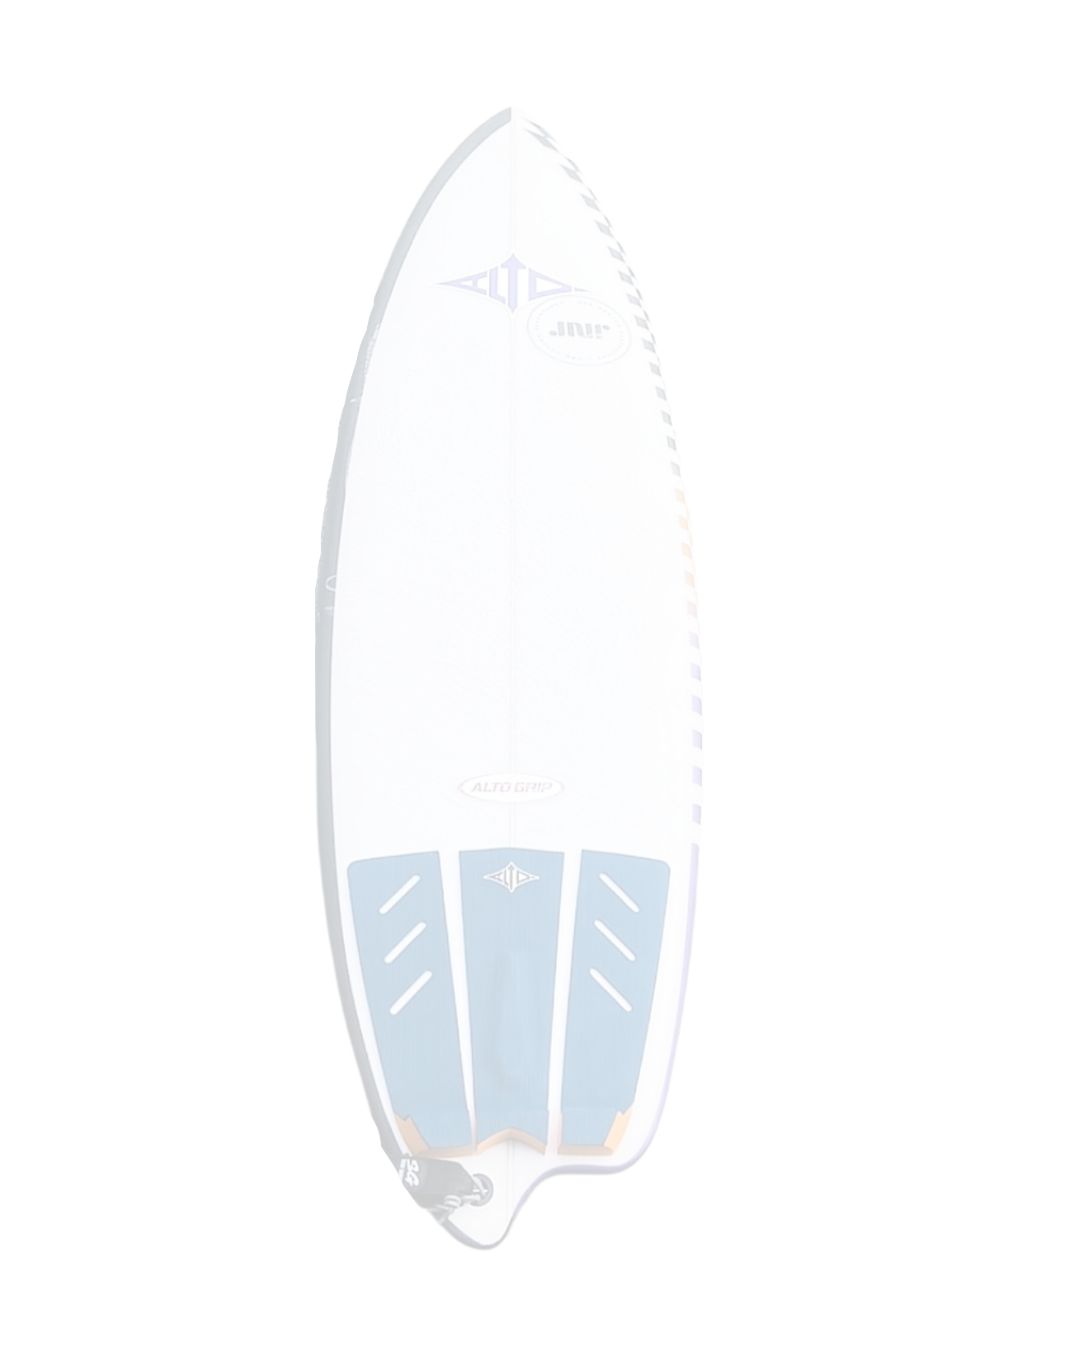 Asymmetric shortboard - JNR Custom Surfboards, Surfboard Shaper Algarve